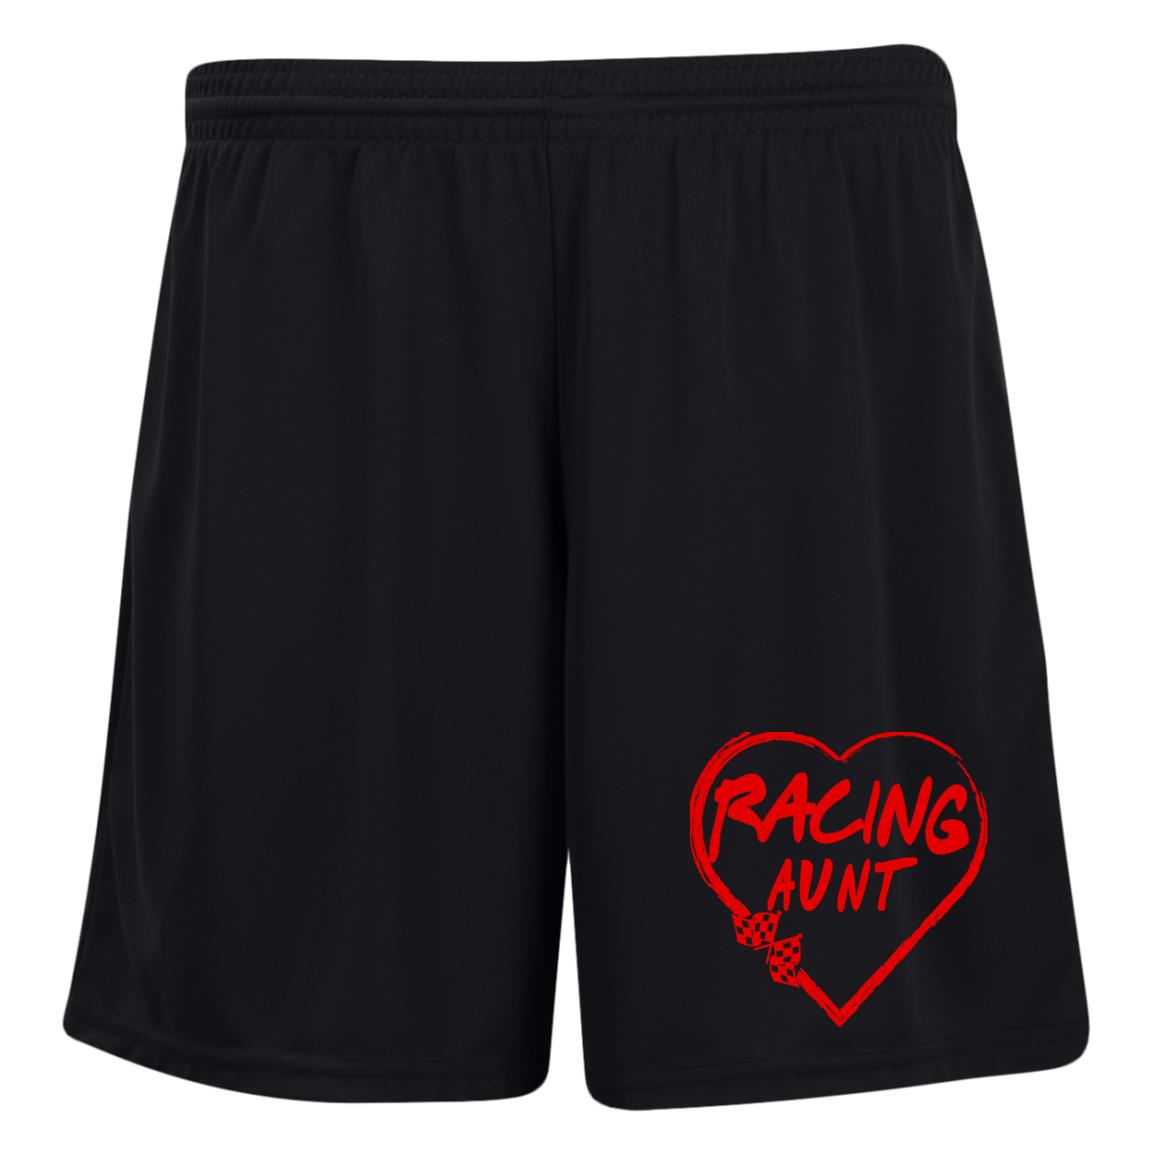 Racing Aunt Heart Ladies' Moisture-Wicking 7 inch Inseam Training Shorts